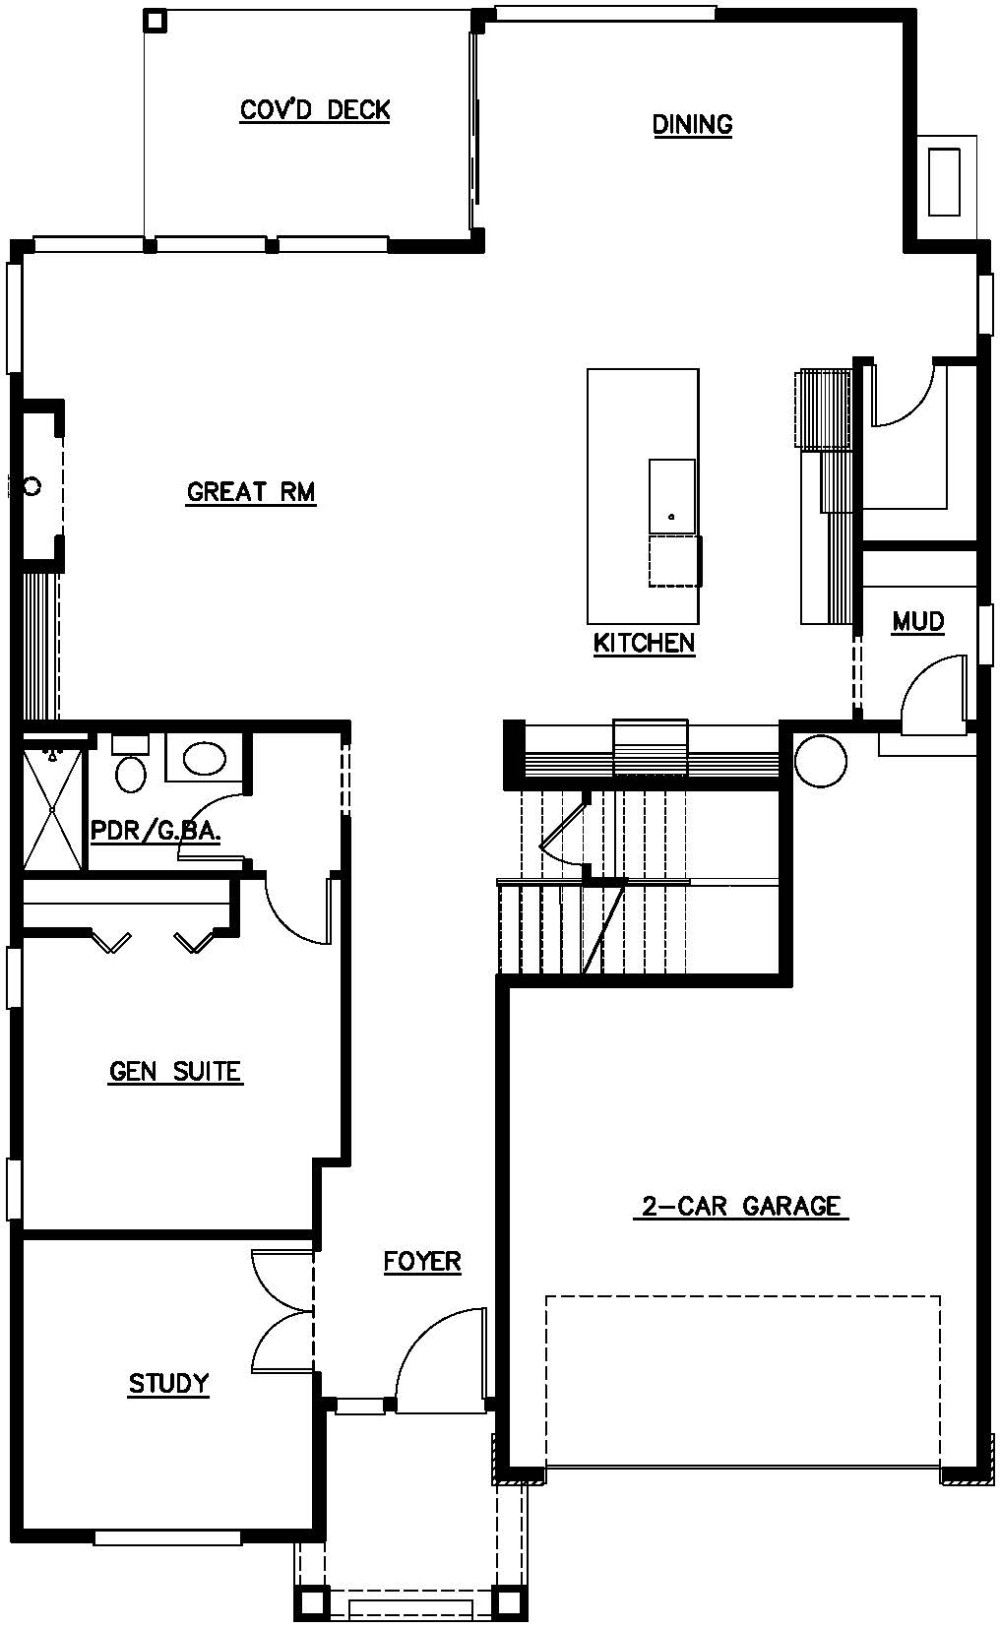 Main Floor Plan floorplan for the Chelan - Lot 11 home